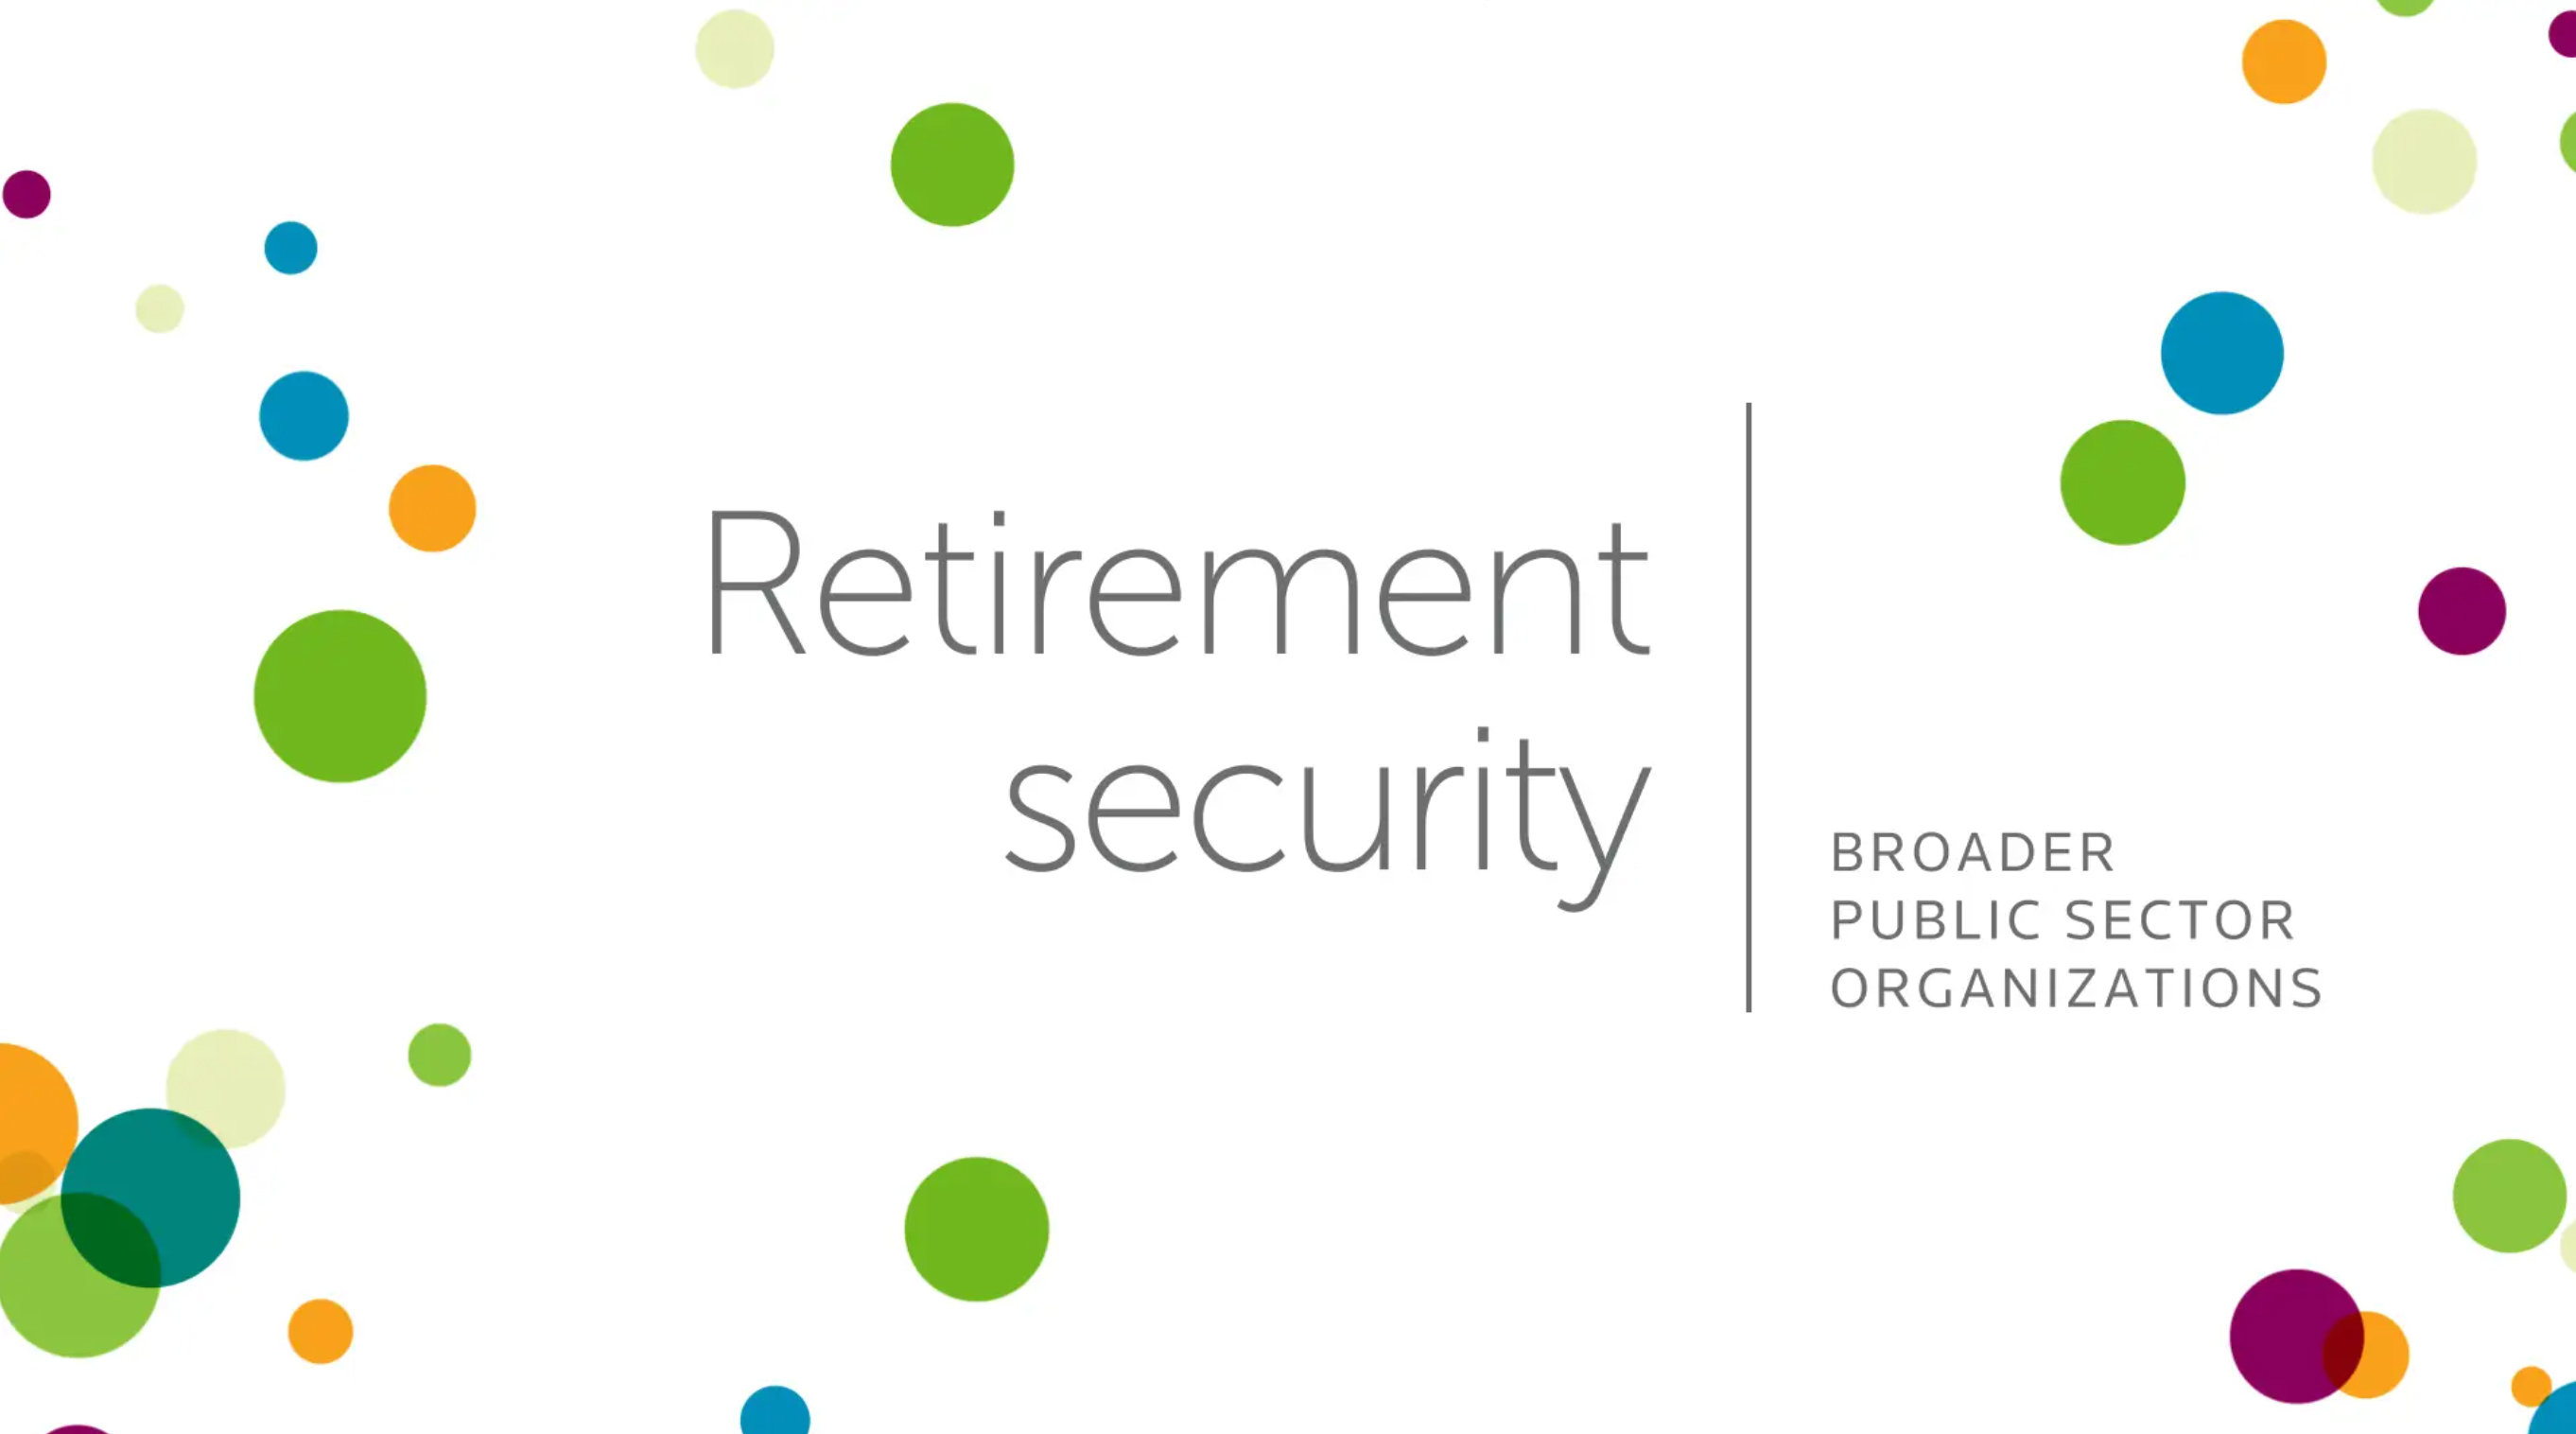 Retirement security